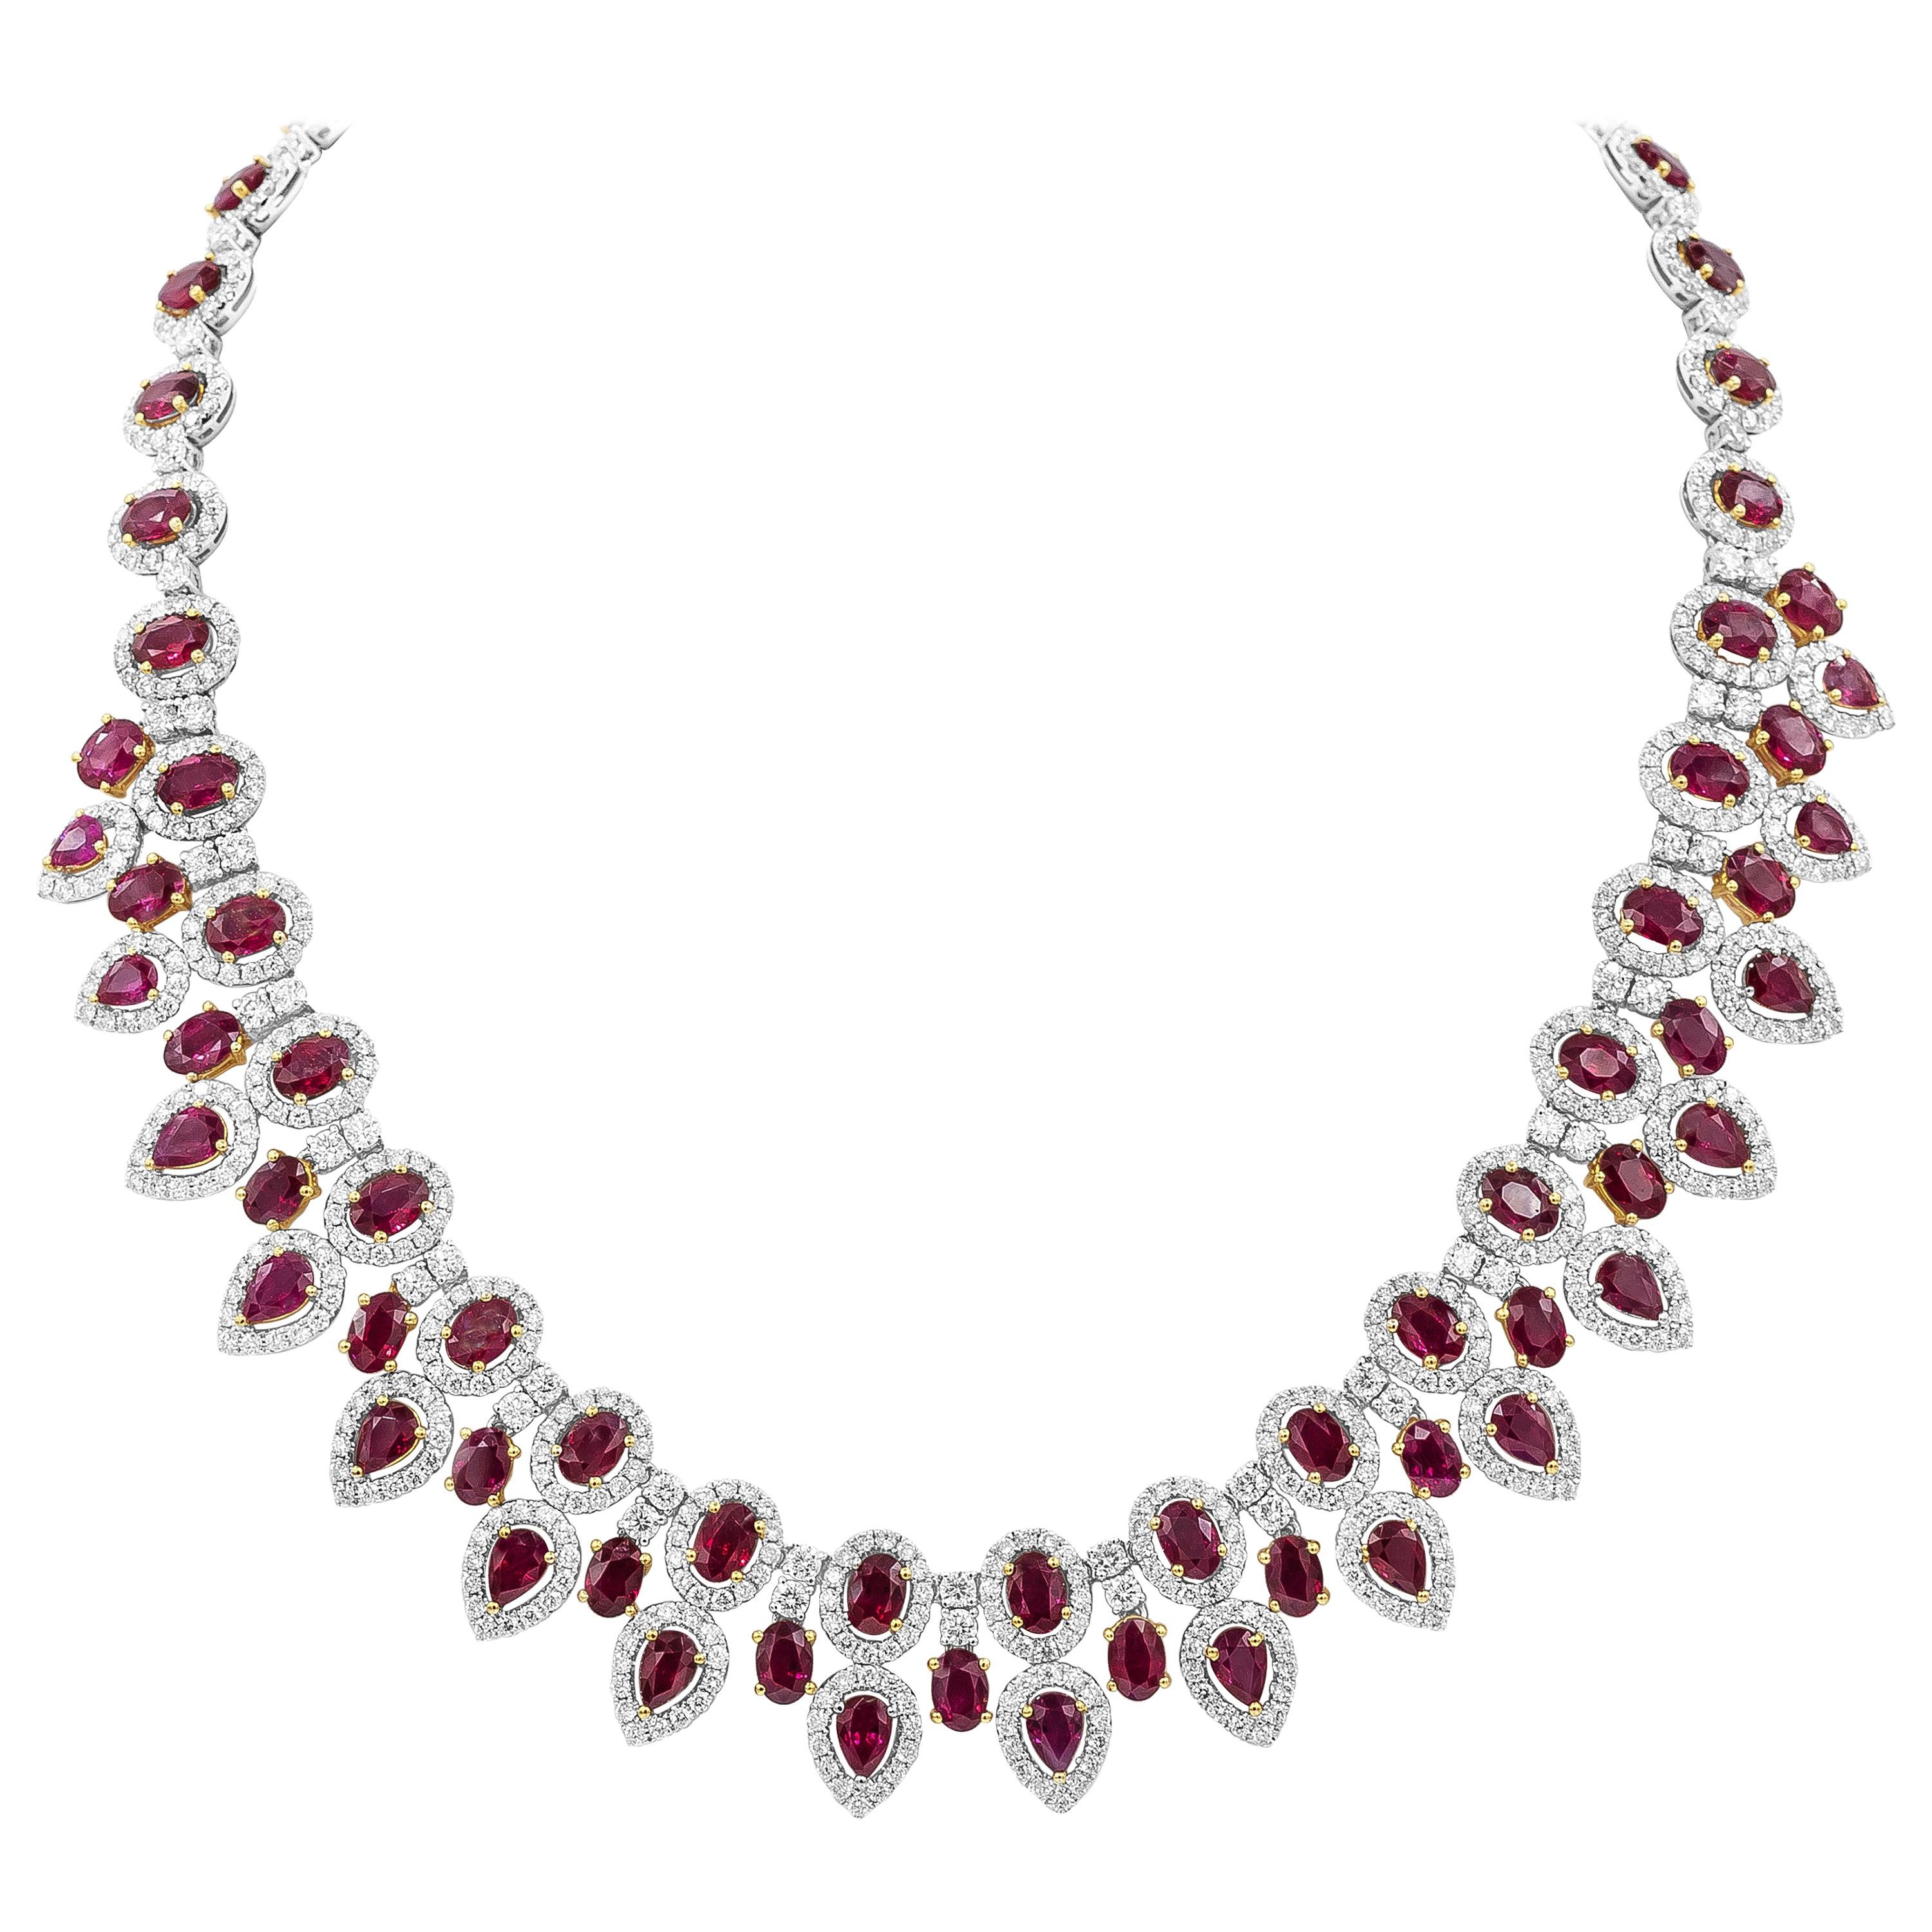 Roman Malakov, GIA Certified 38.92 Carat Burmese Ruby with Diamond Halo Necklace